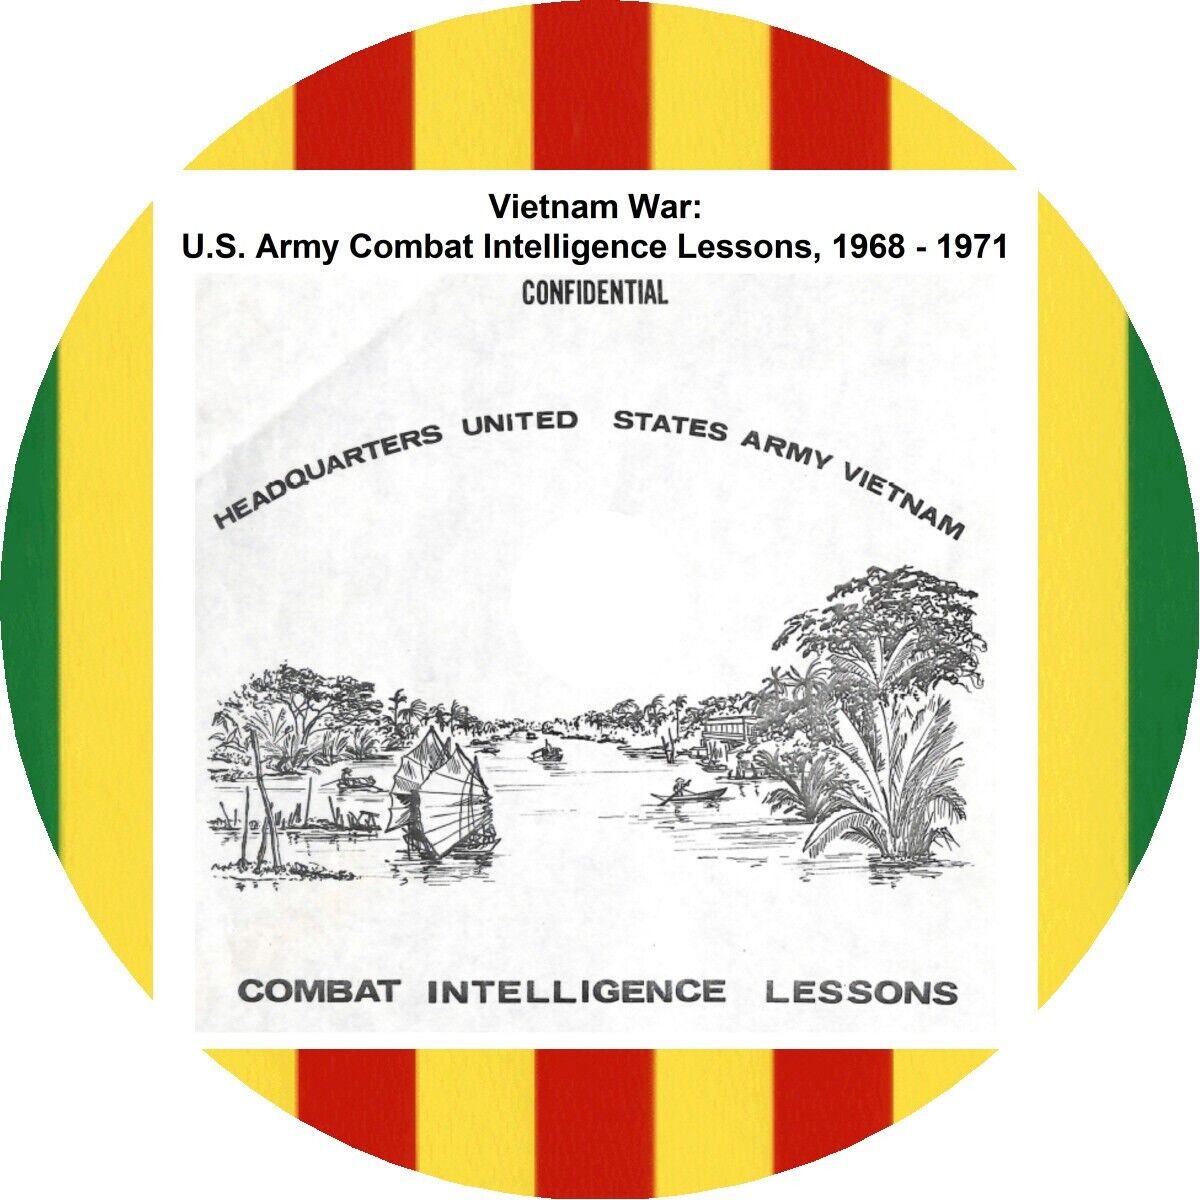 Vietnam War: U.S. Army Combat Intelligence Lessons, 1968 - 1971